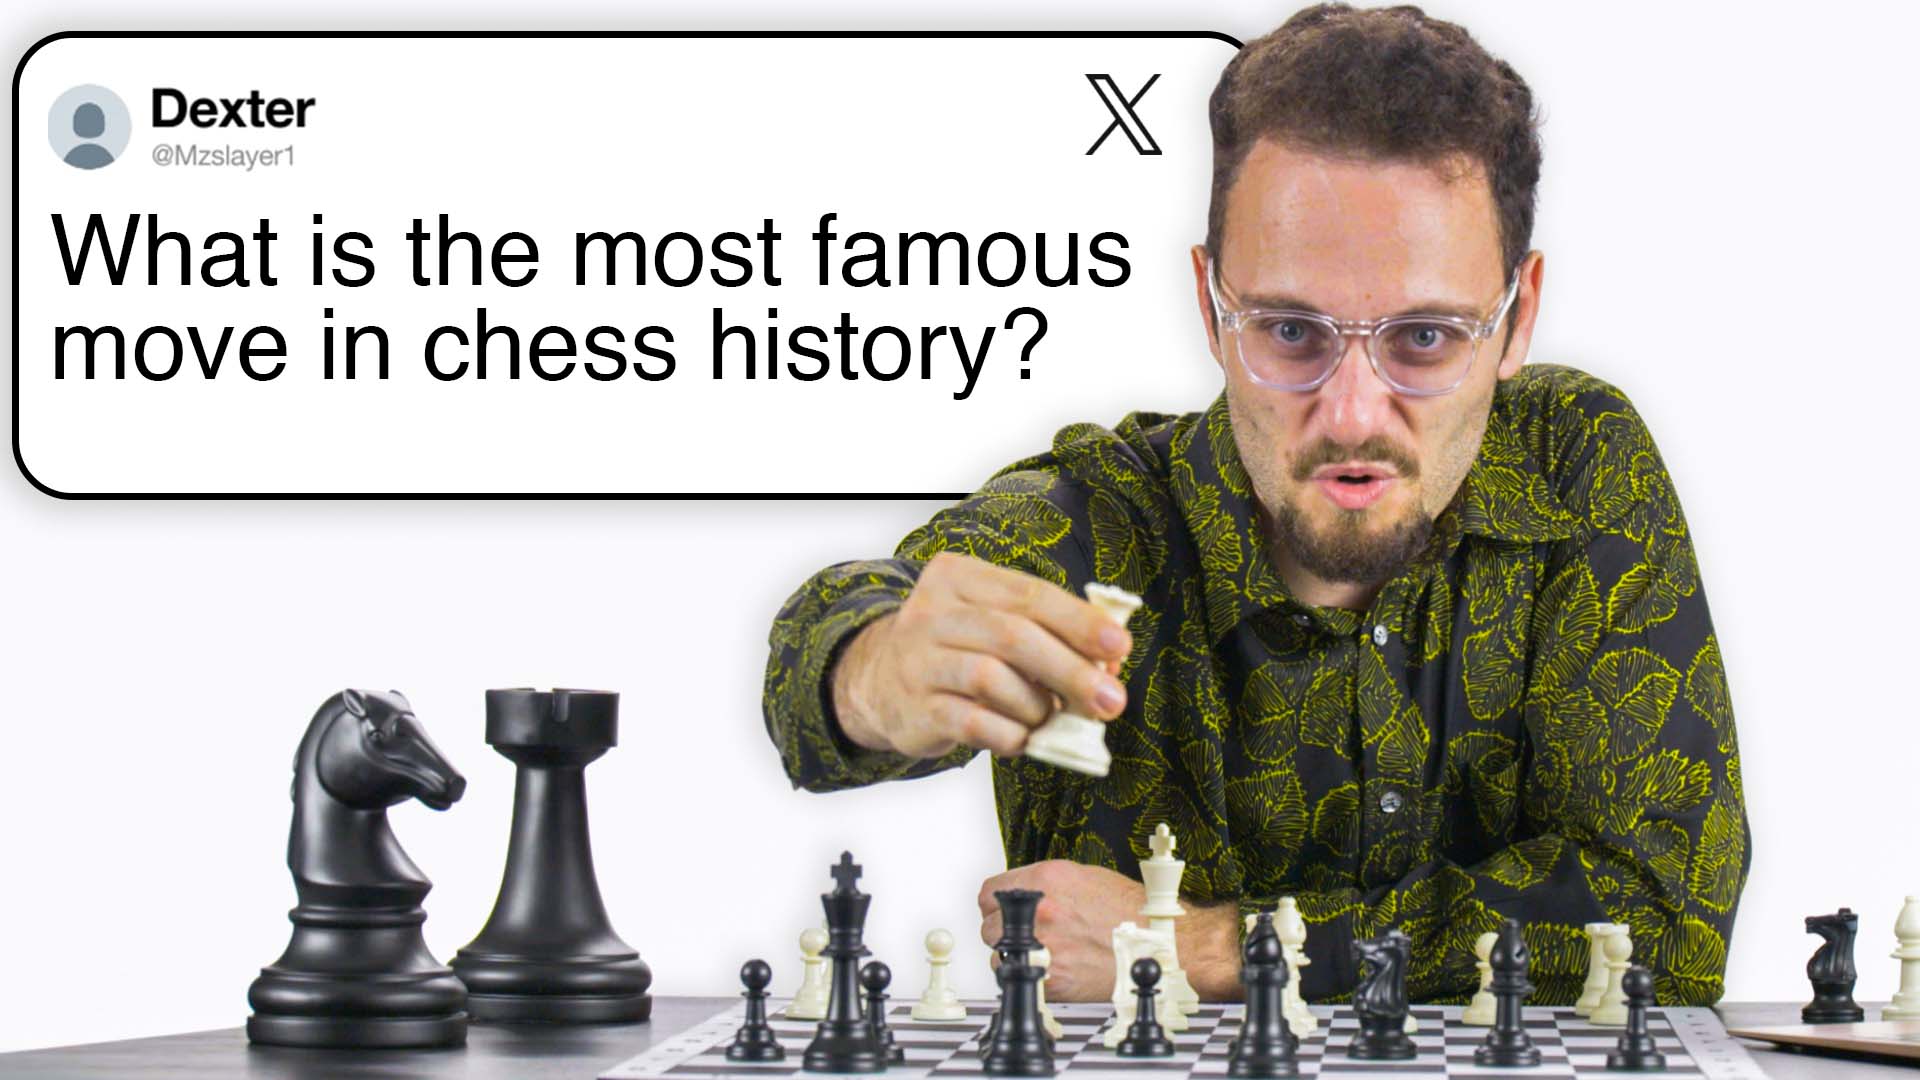 8 Player Chess Board Editor